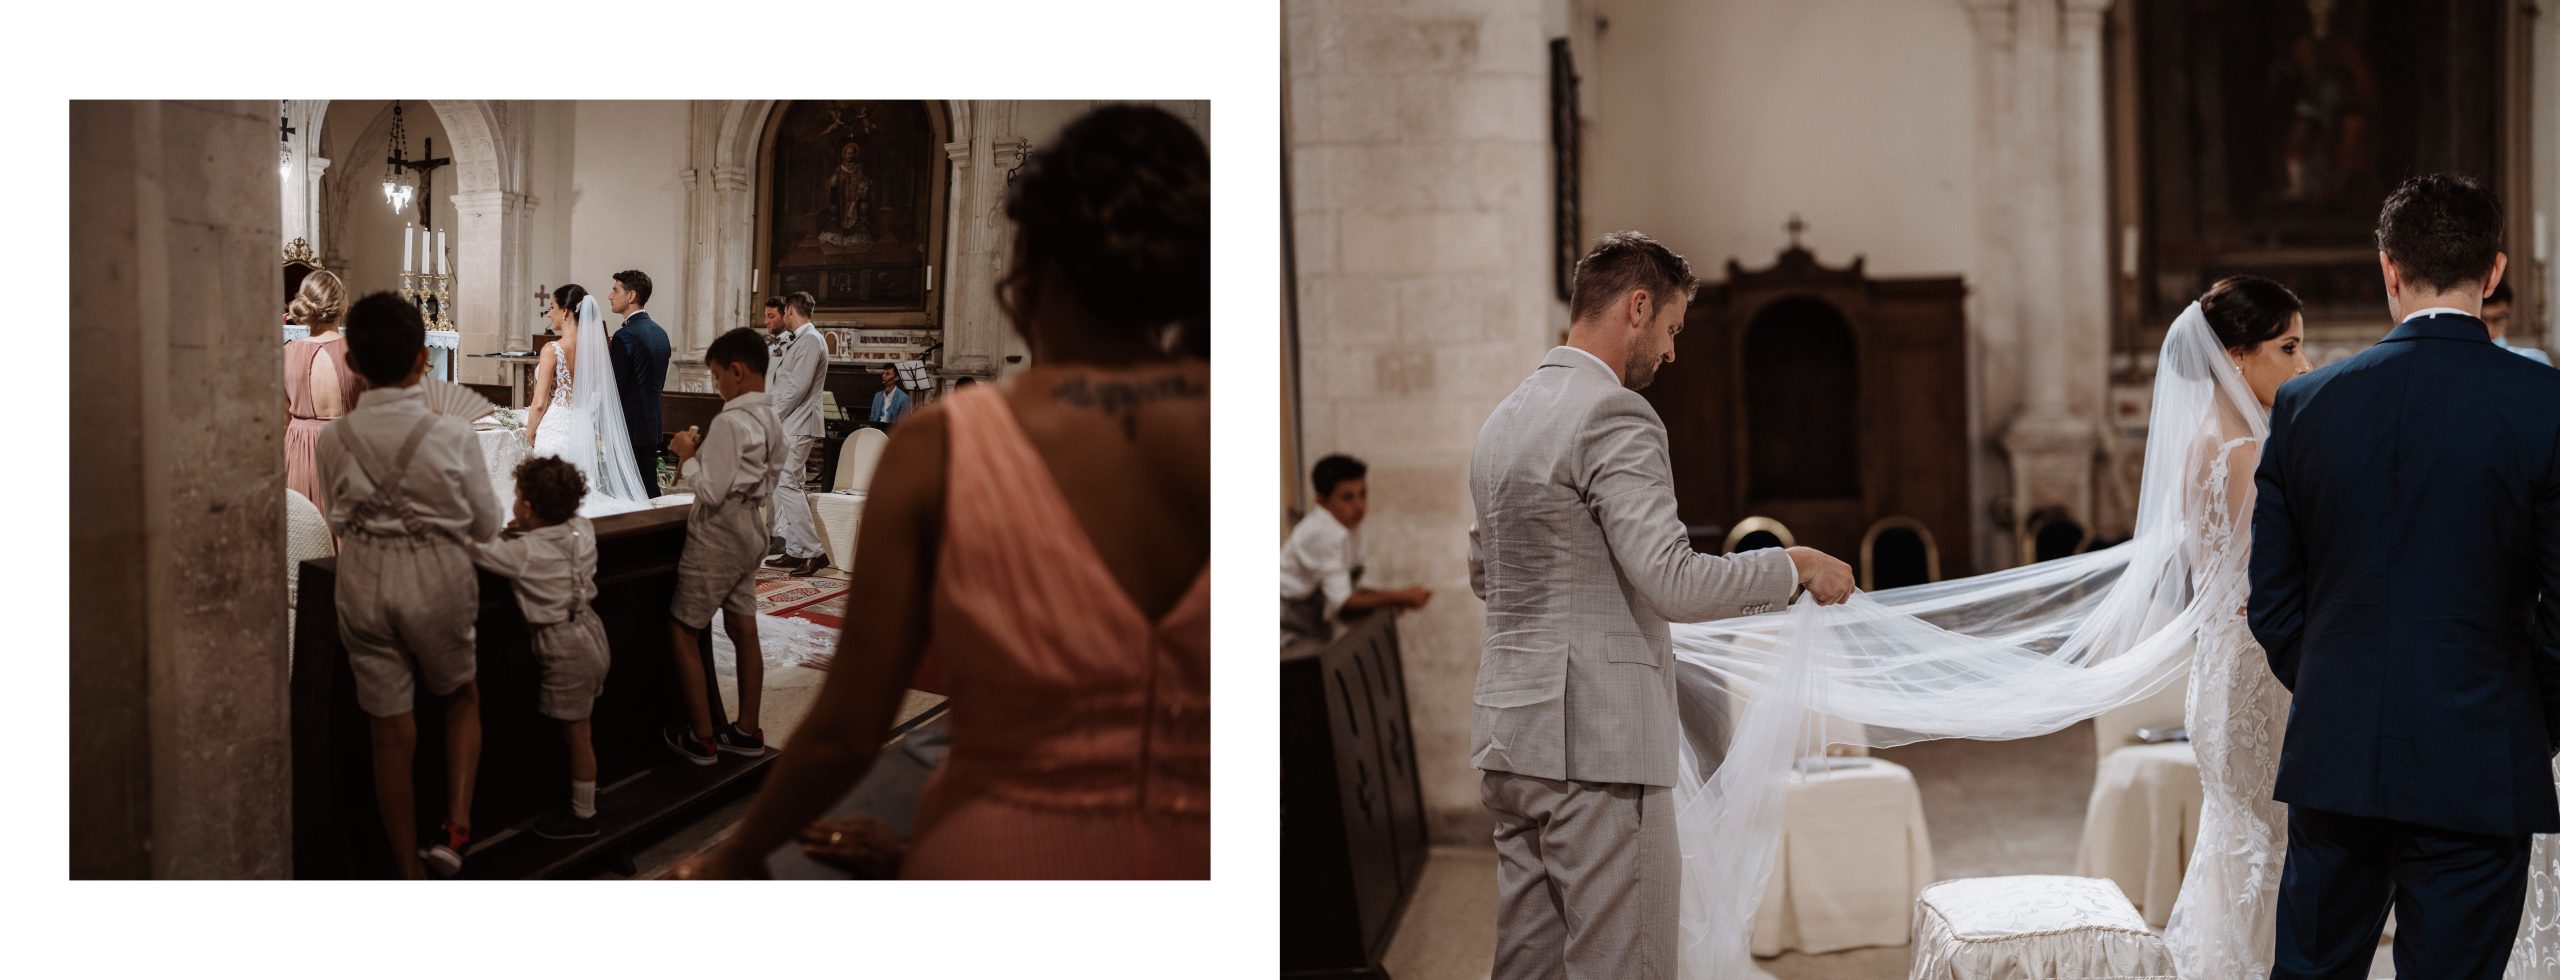 Jan e Melania 29 scaled - fotografo matrimonio catania